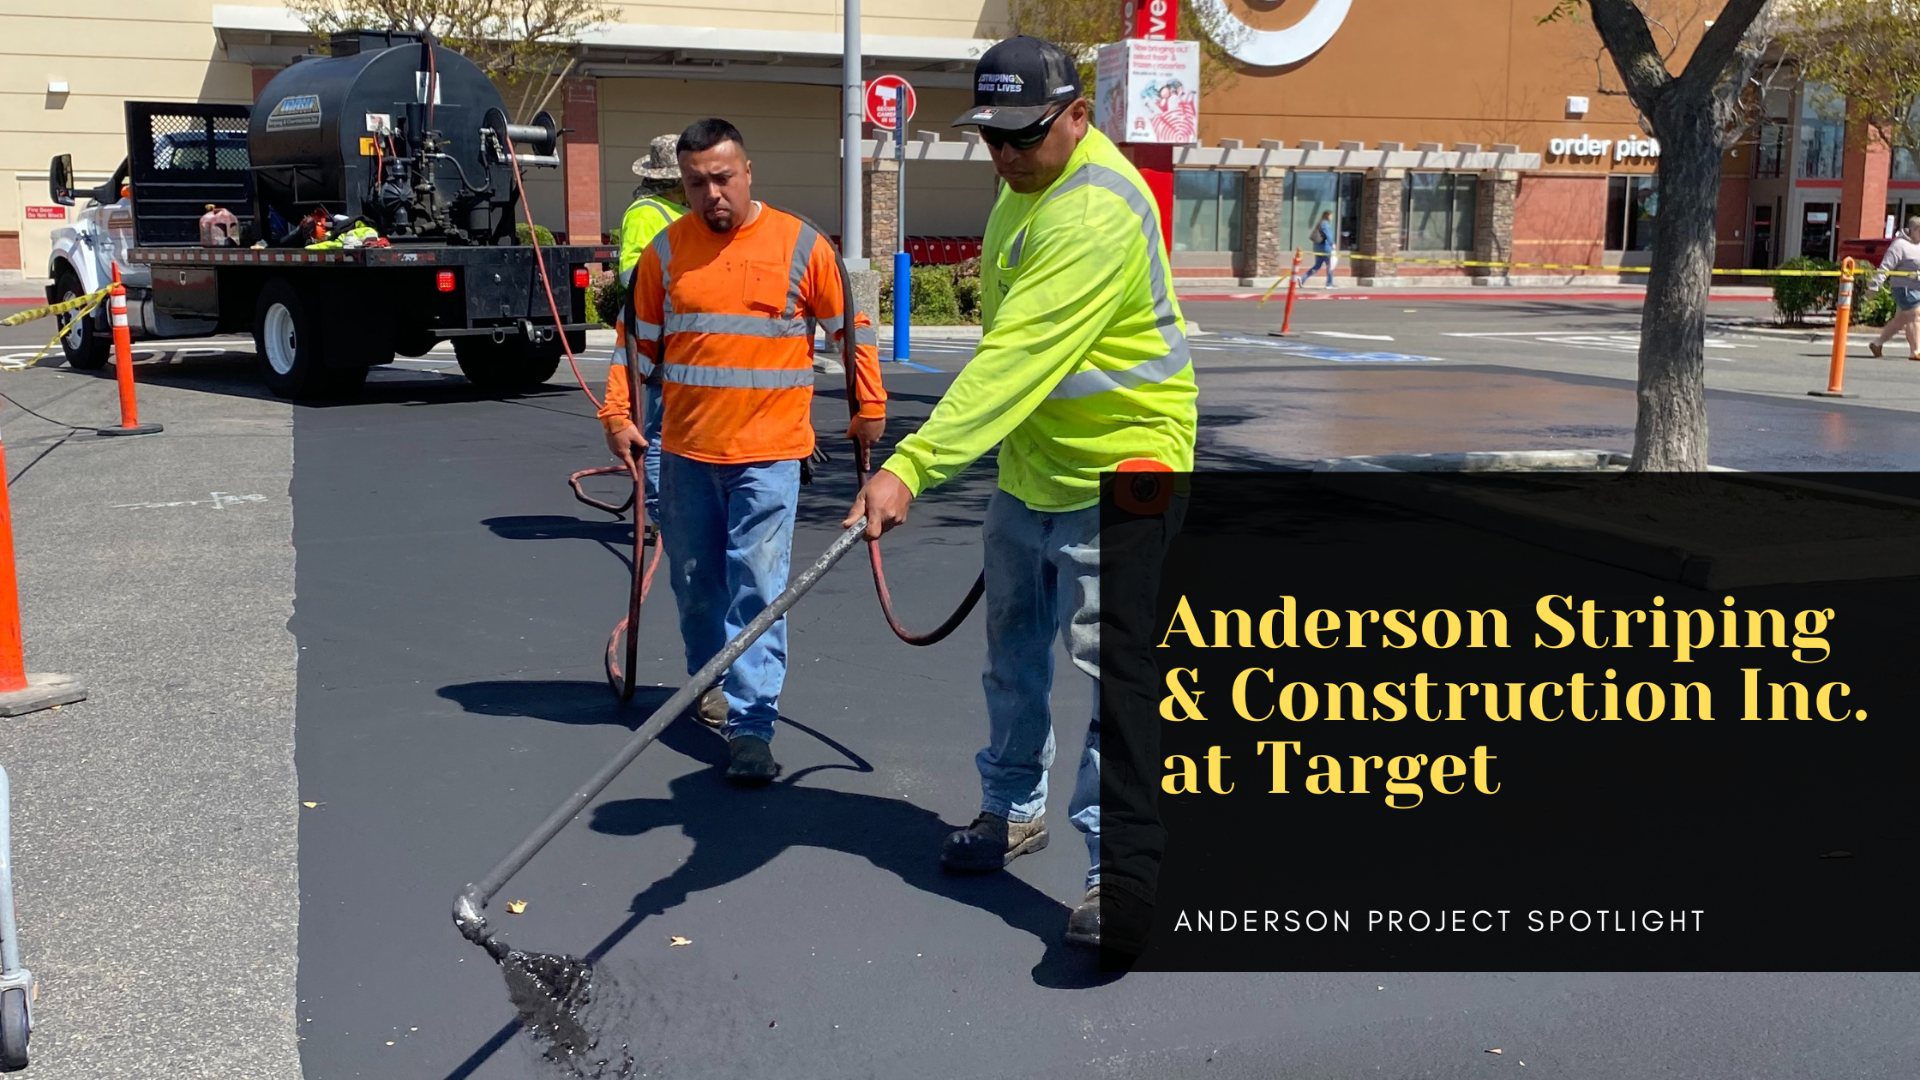 Anderson Striping & Construction Inc. at Target